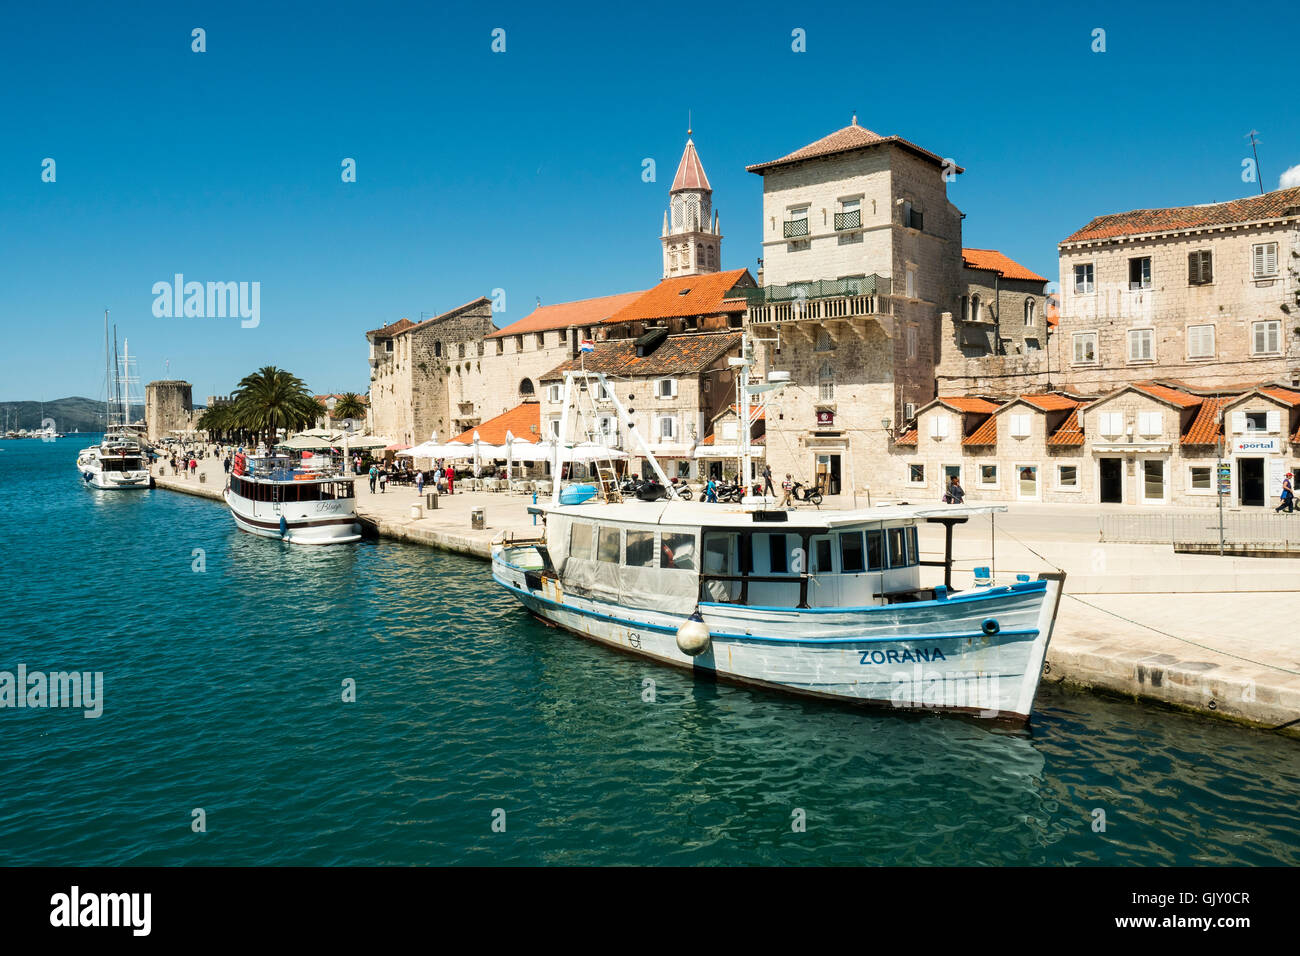 Ivory ban Berislavića, Trogir. Historic town on the Adriatic coast in Split-Dalmatia County, Croatia, Stock Photo